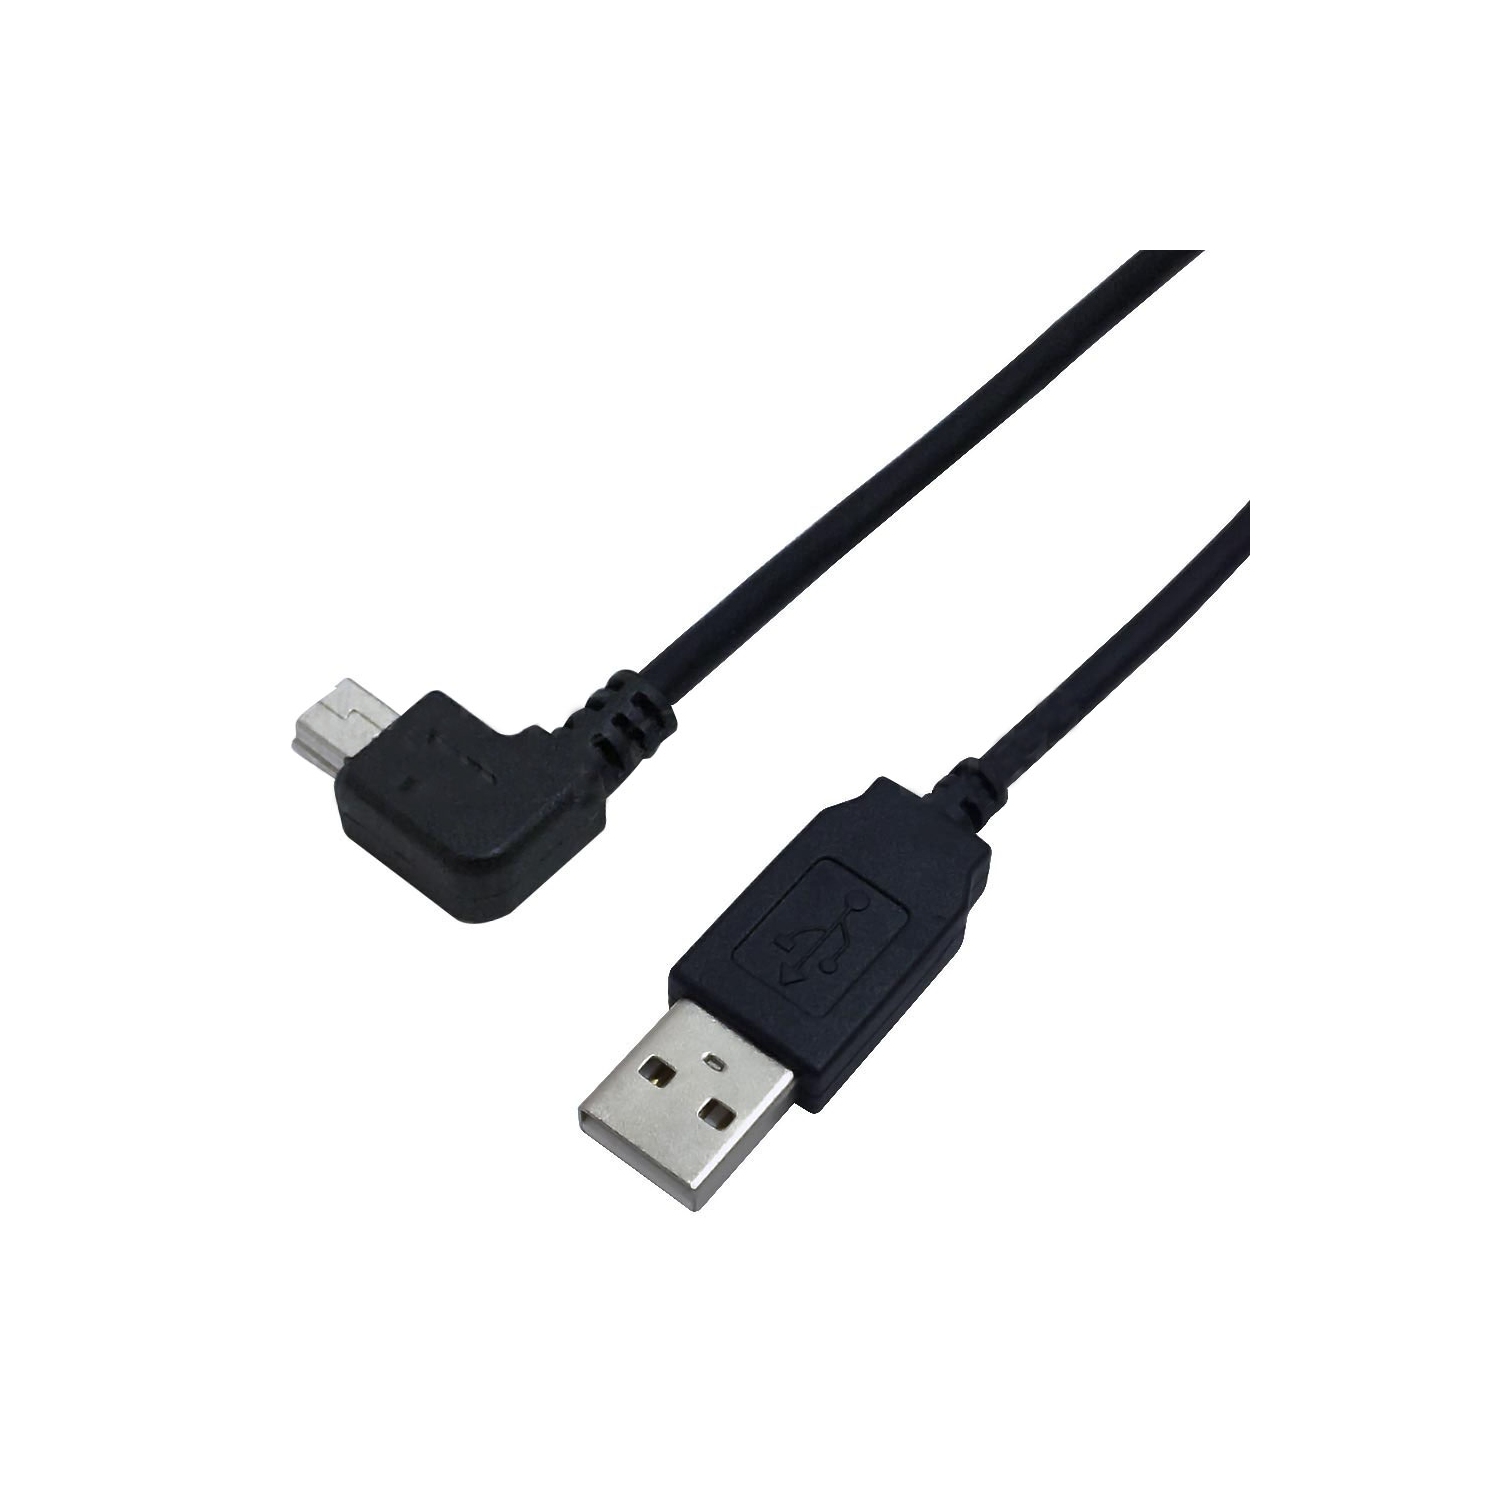 Free Shipping! HYFAI USB 2.0 A Straight Male to Mini-B 5-Pin Mini USB Left Angle Male Cable, 10 ft